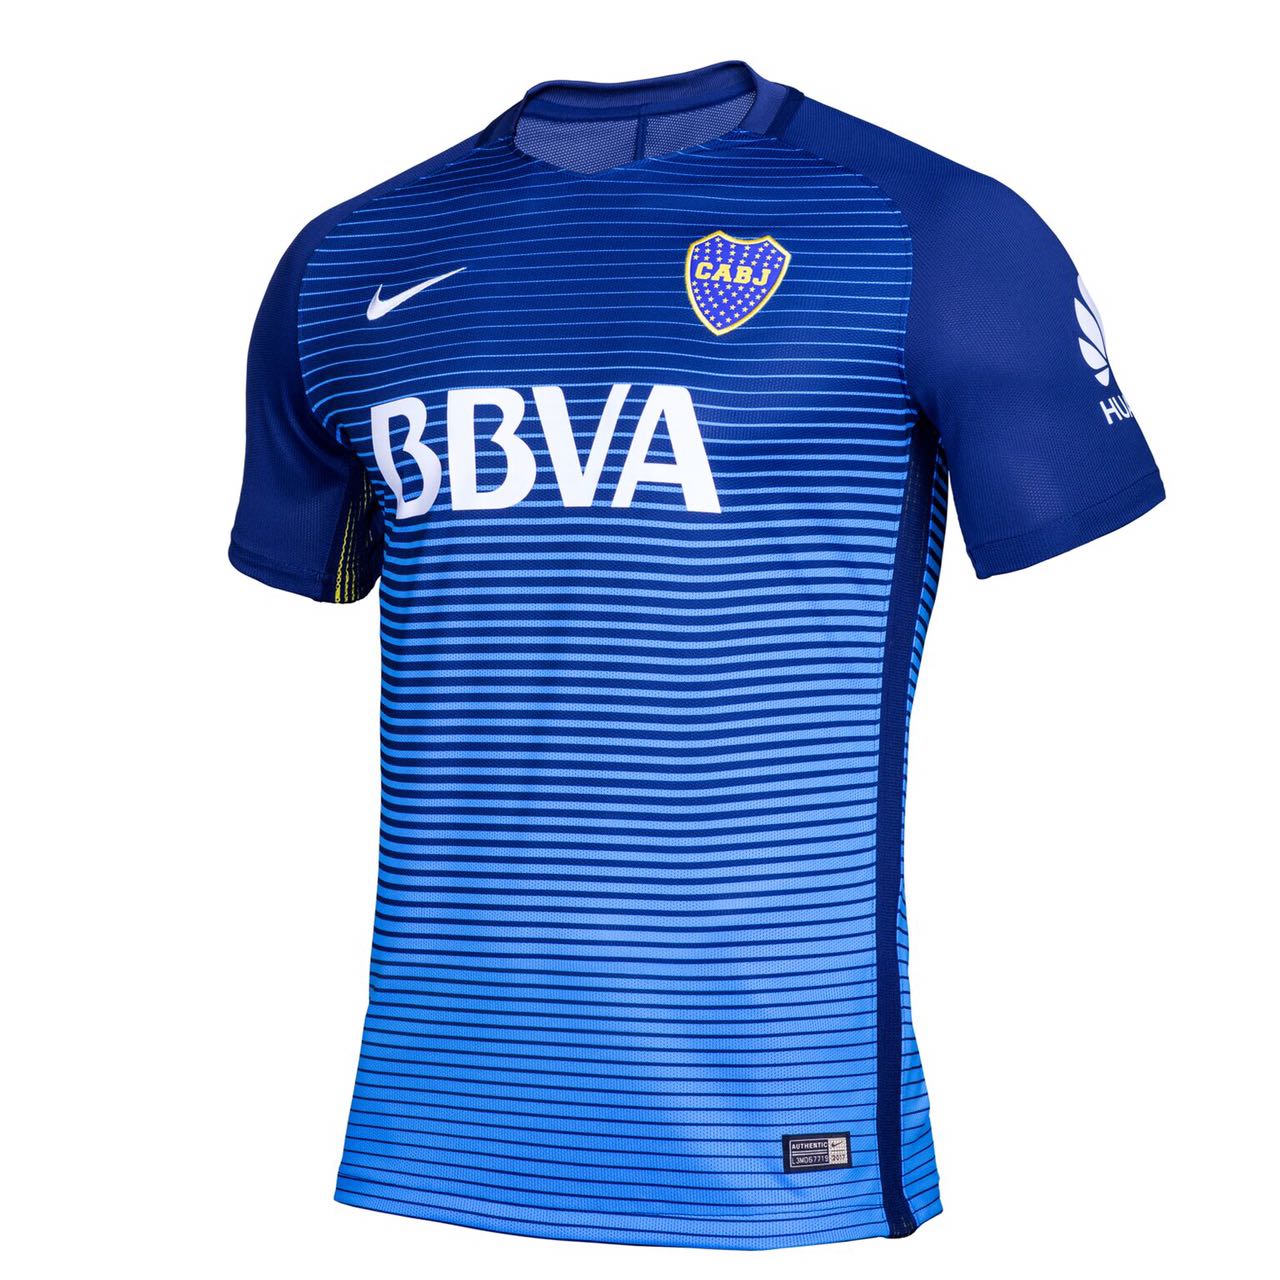 Tercera camiseta de Boca Juniors Nike 2017